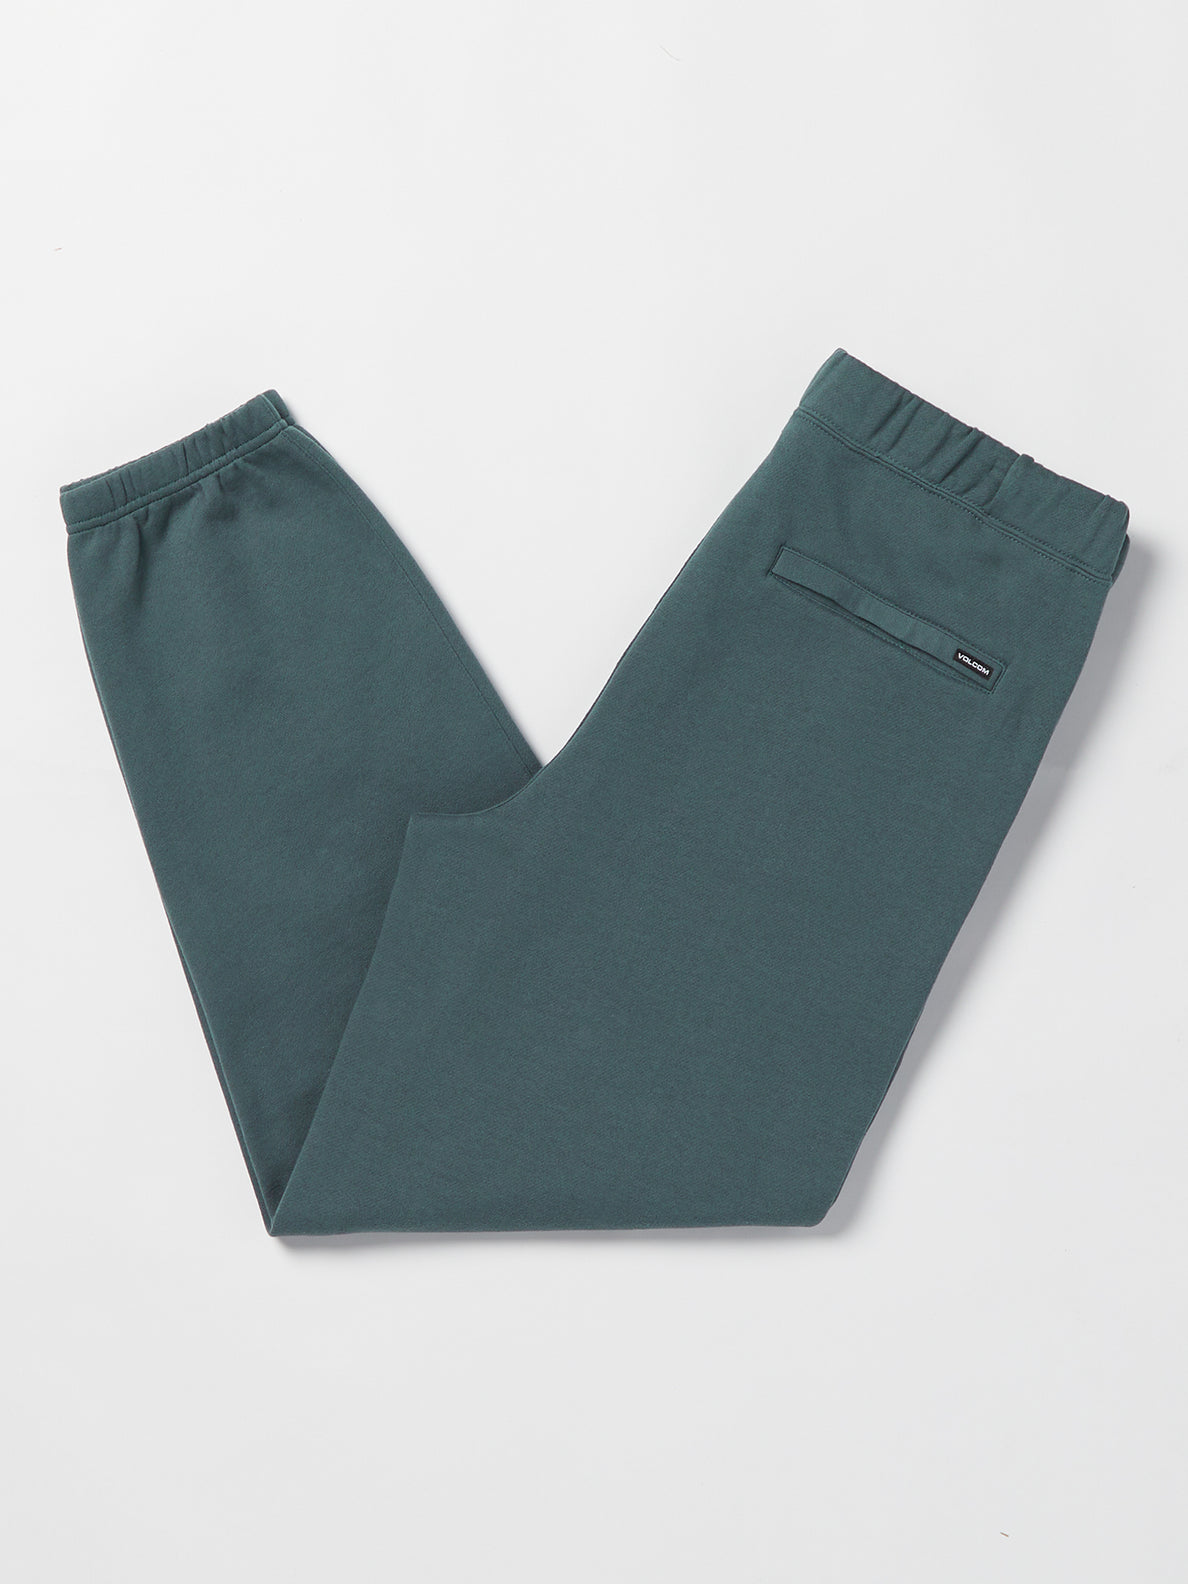 Lucky Brand Men's Sweatpants – Cozy Lounge Jogger Pants (S-XL)